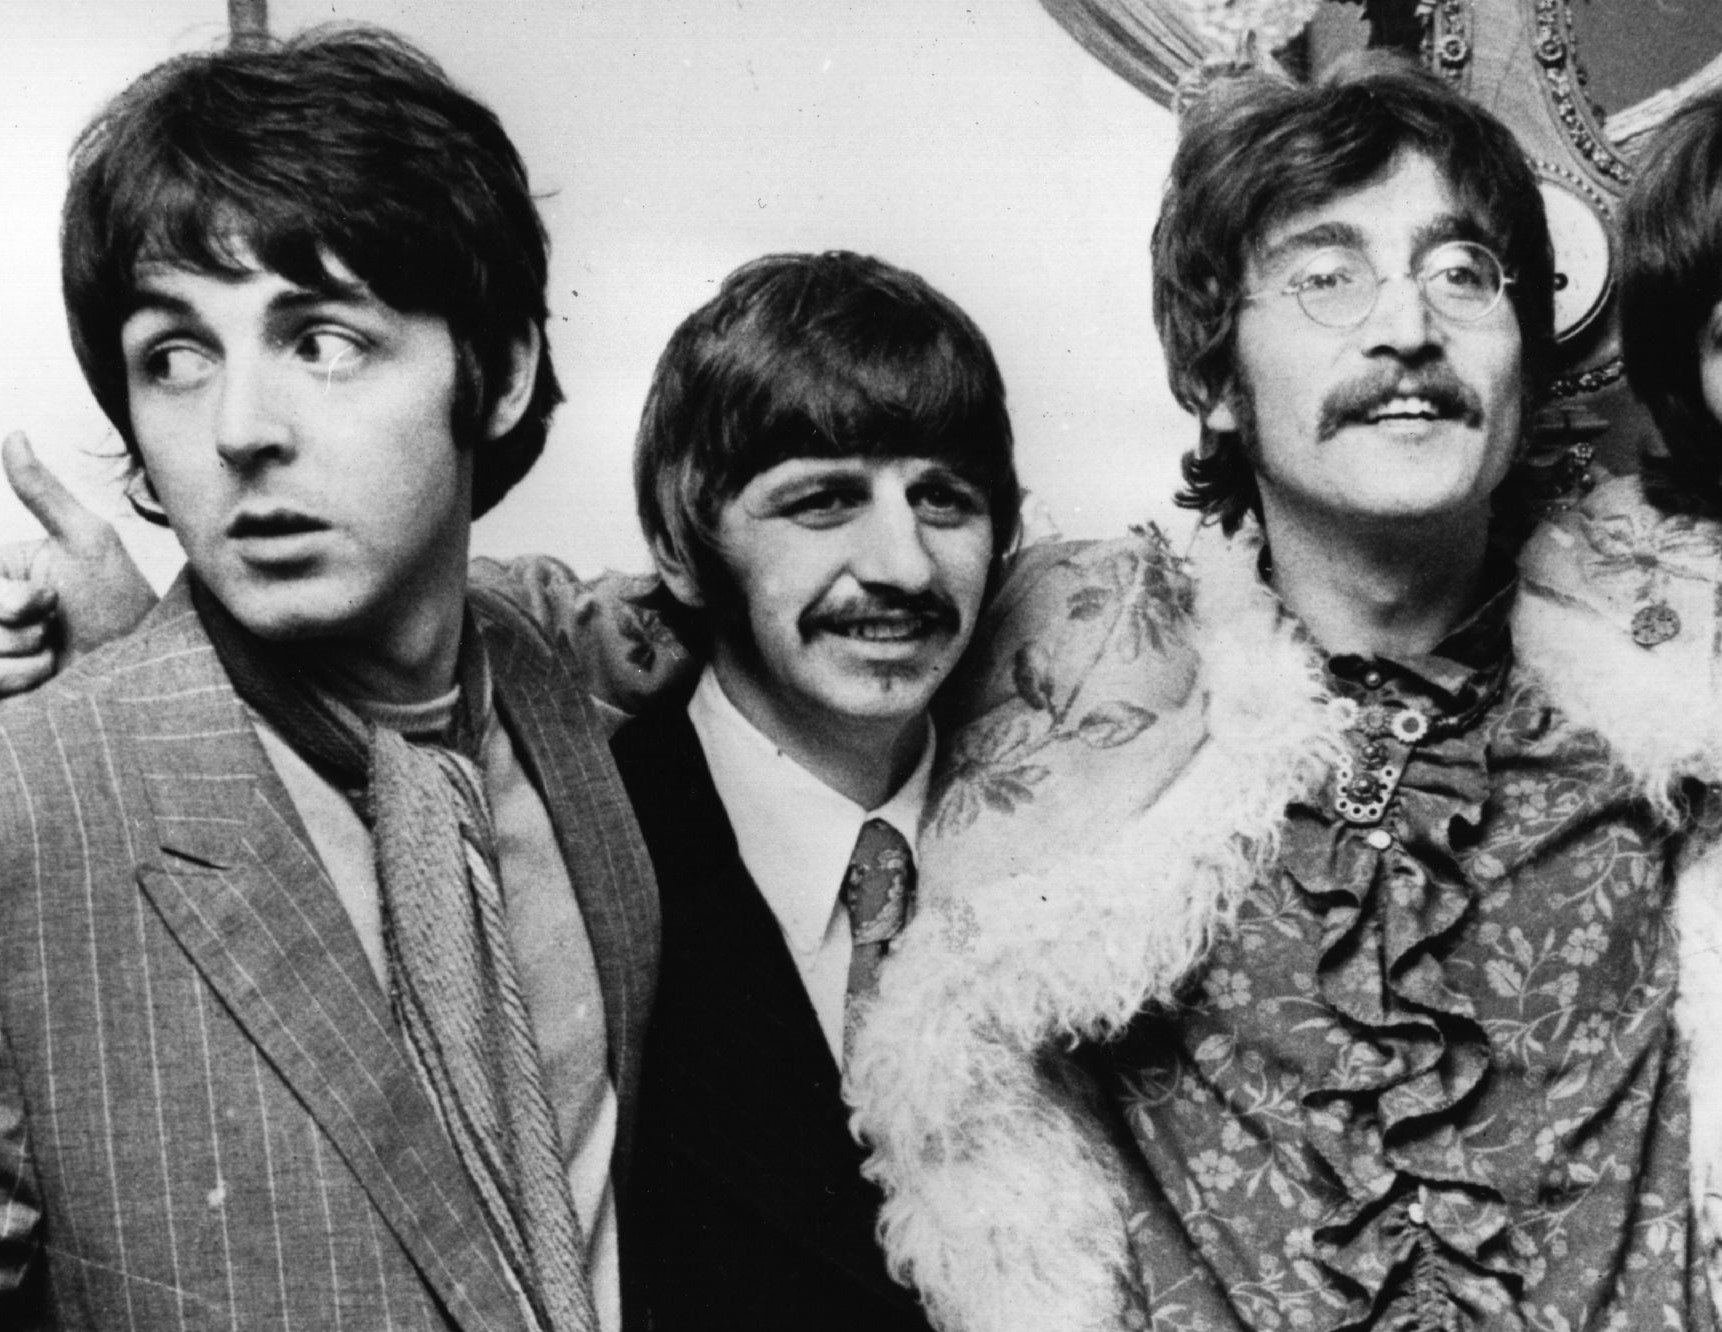 The Beatles' Paul McCartney, Ringo Starr, and John Lennon during the "Hey Jude" era